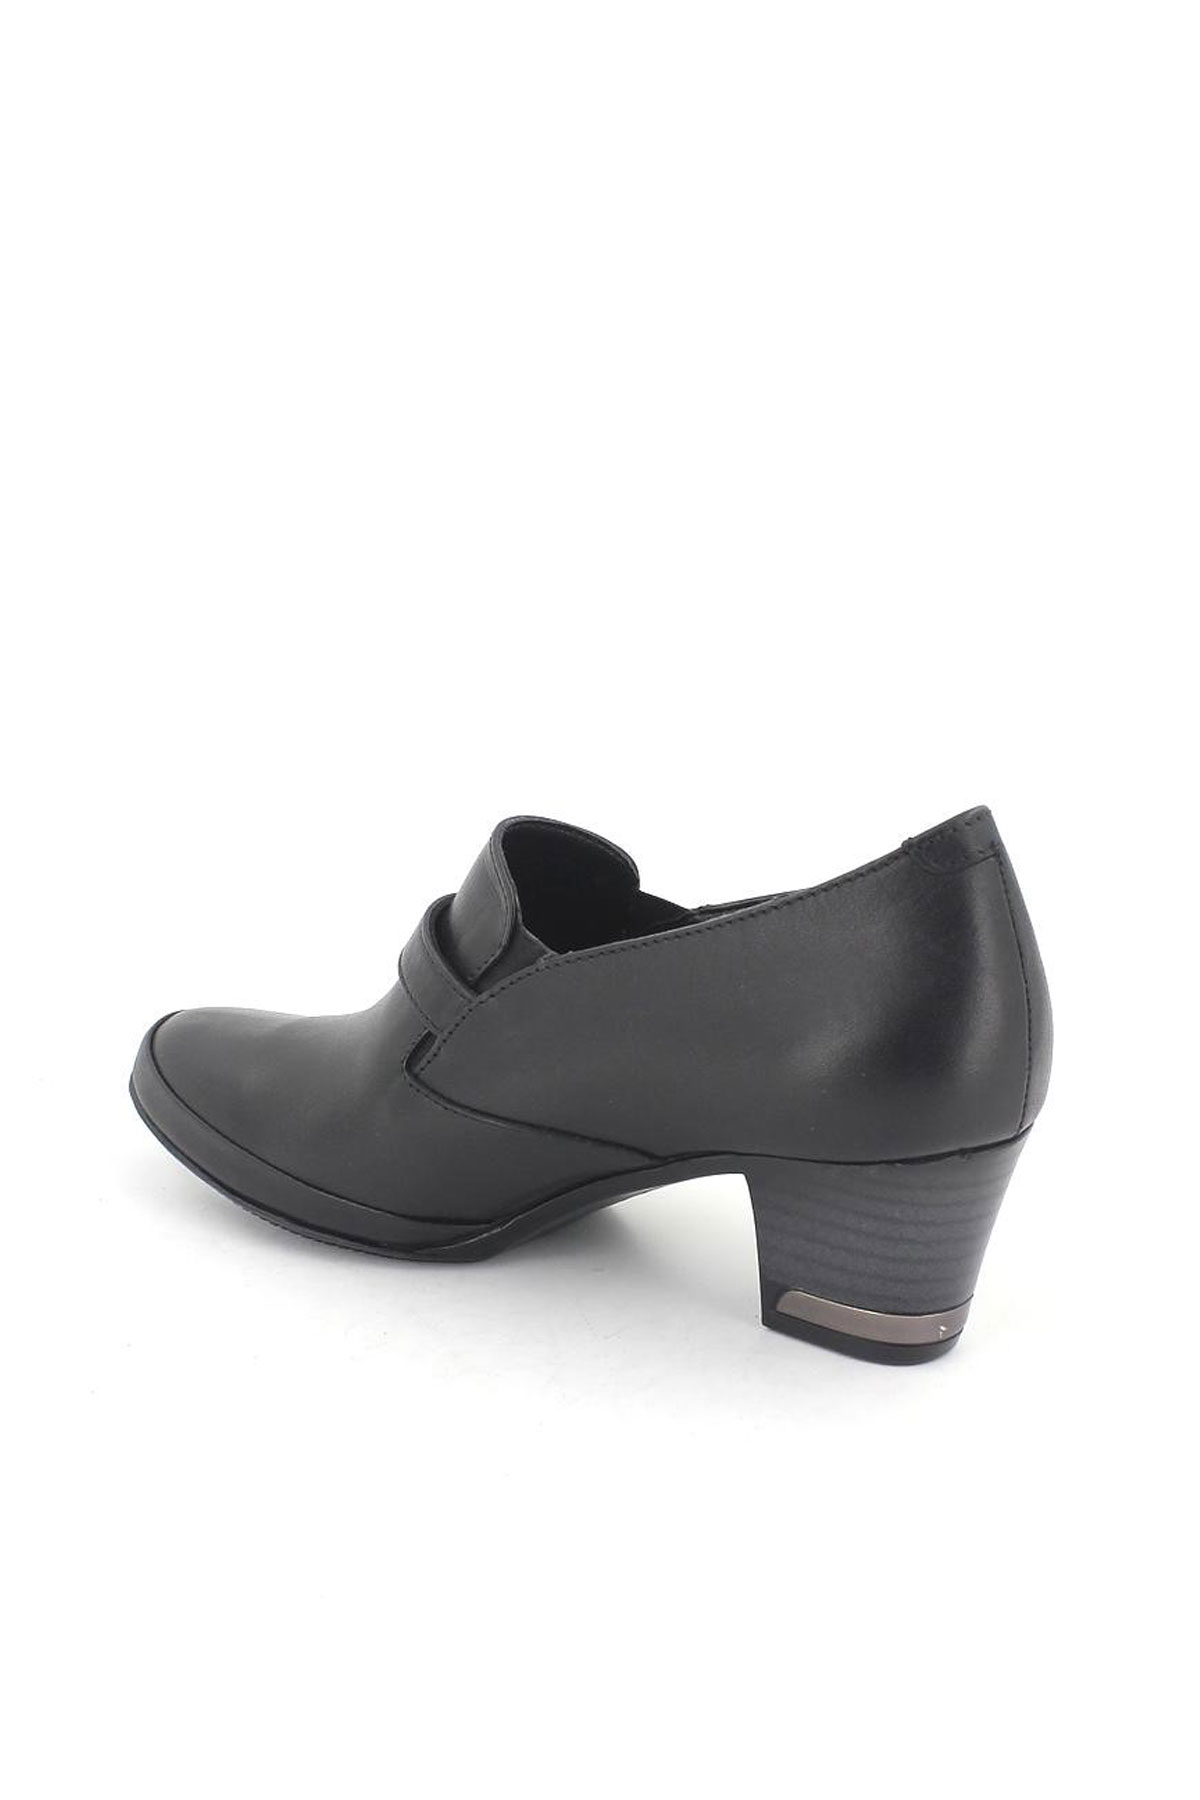 Kadın Topuklu Deri Ayakkabı Siyah 1348K - Thumbnail